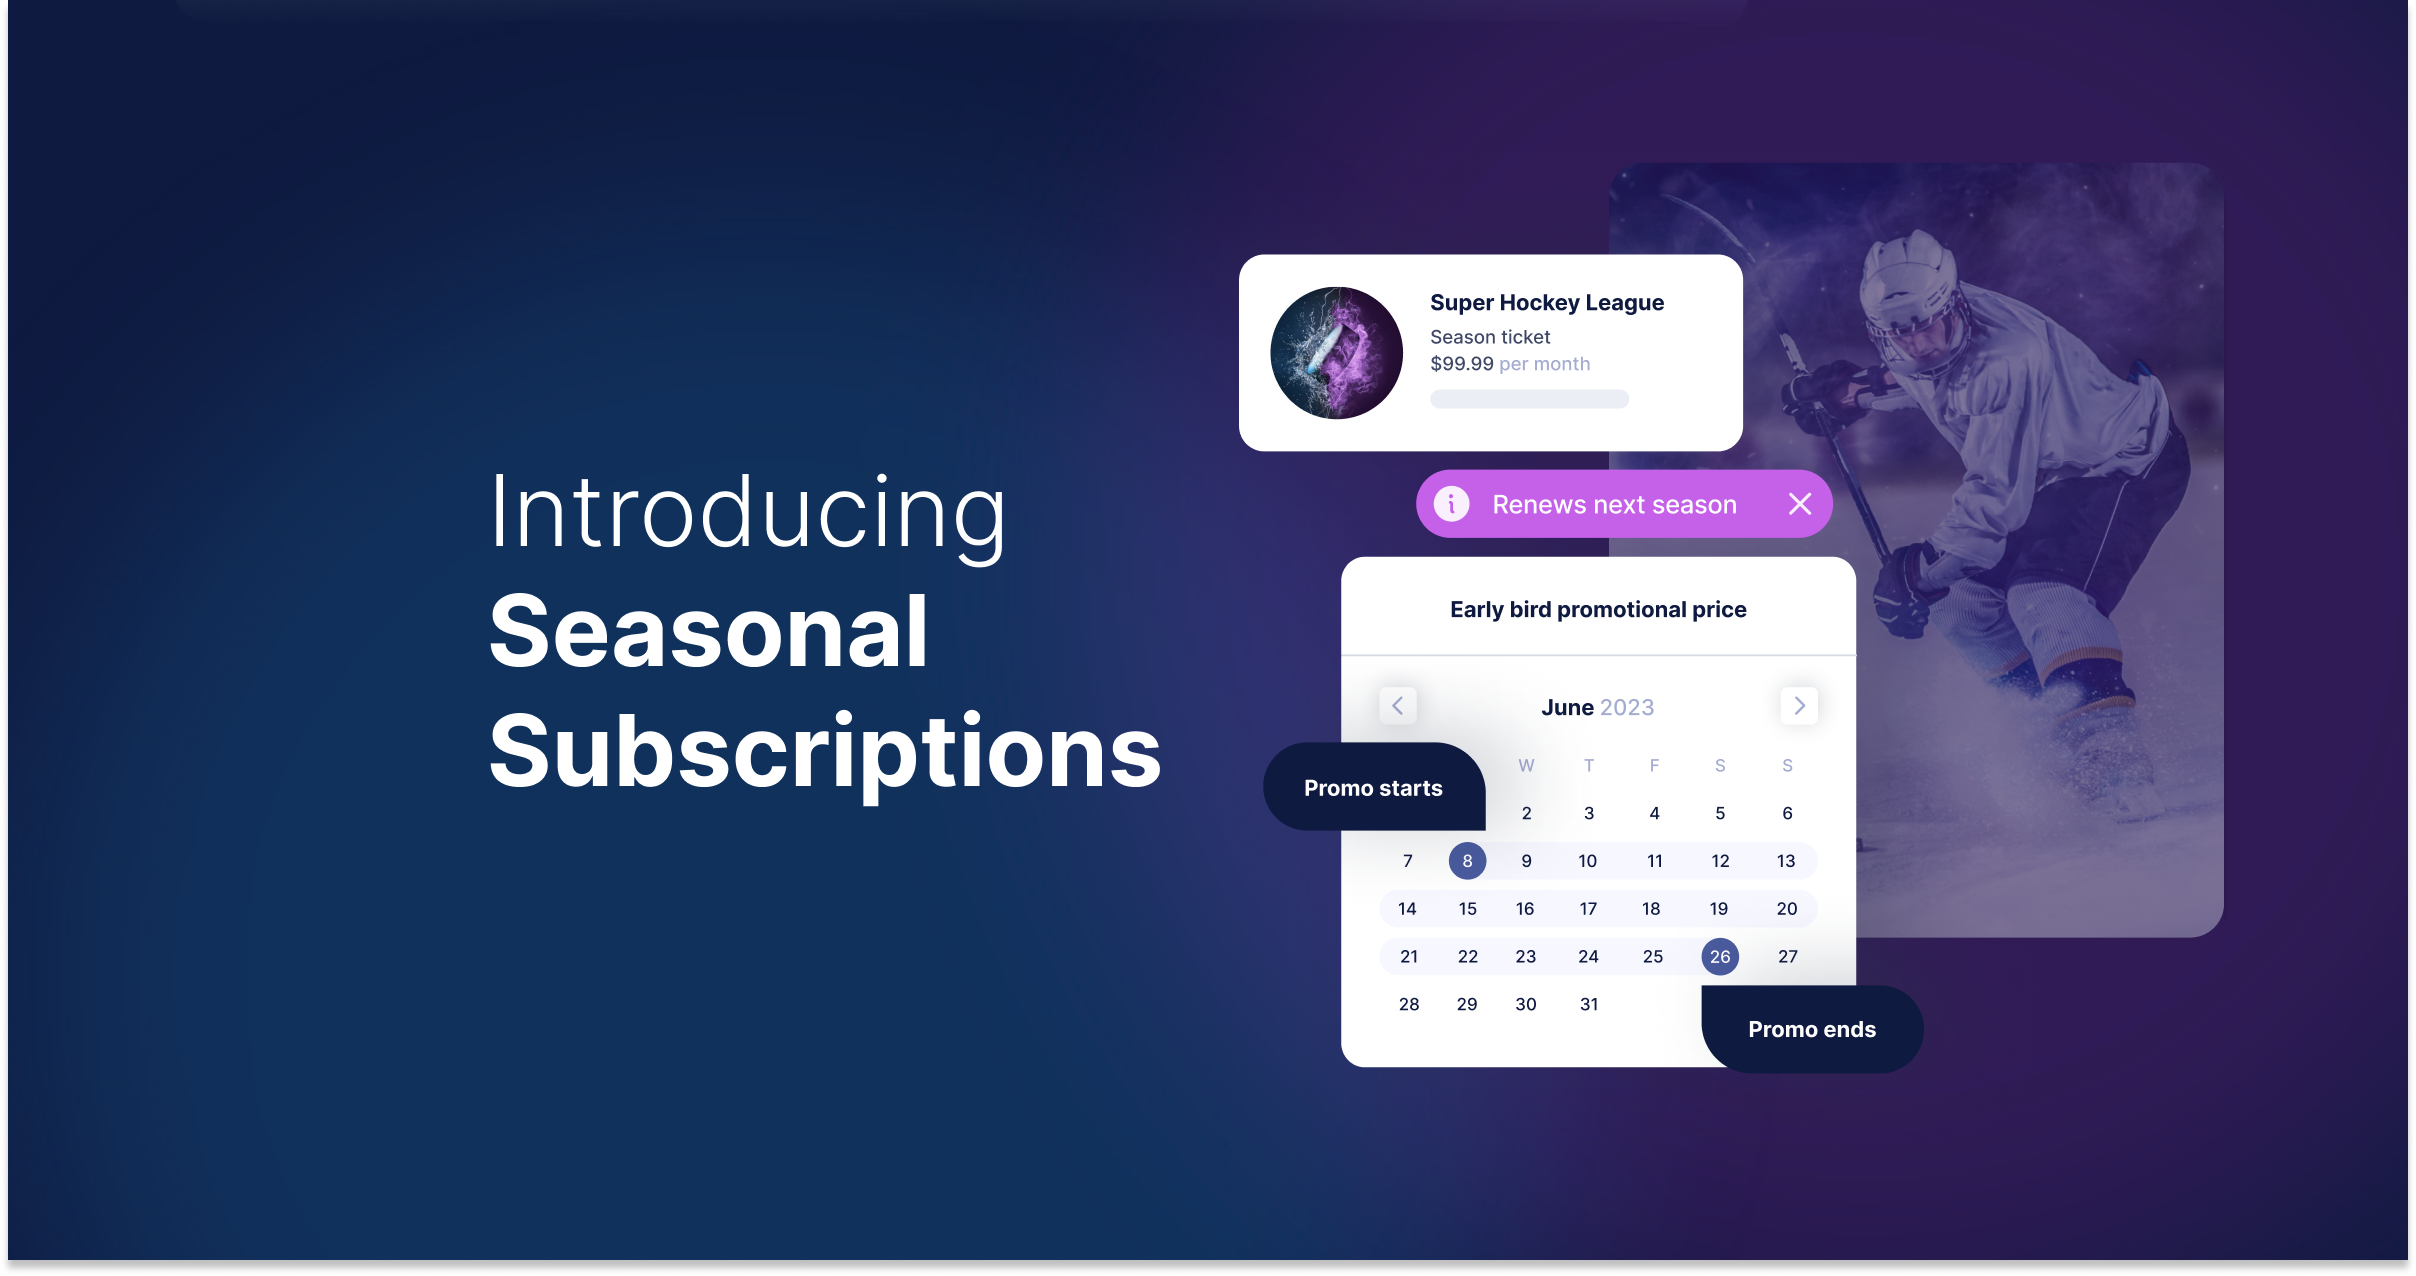 Seasonal Subscriptions announcement